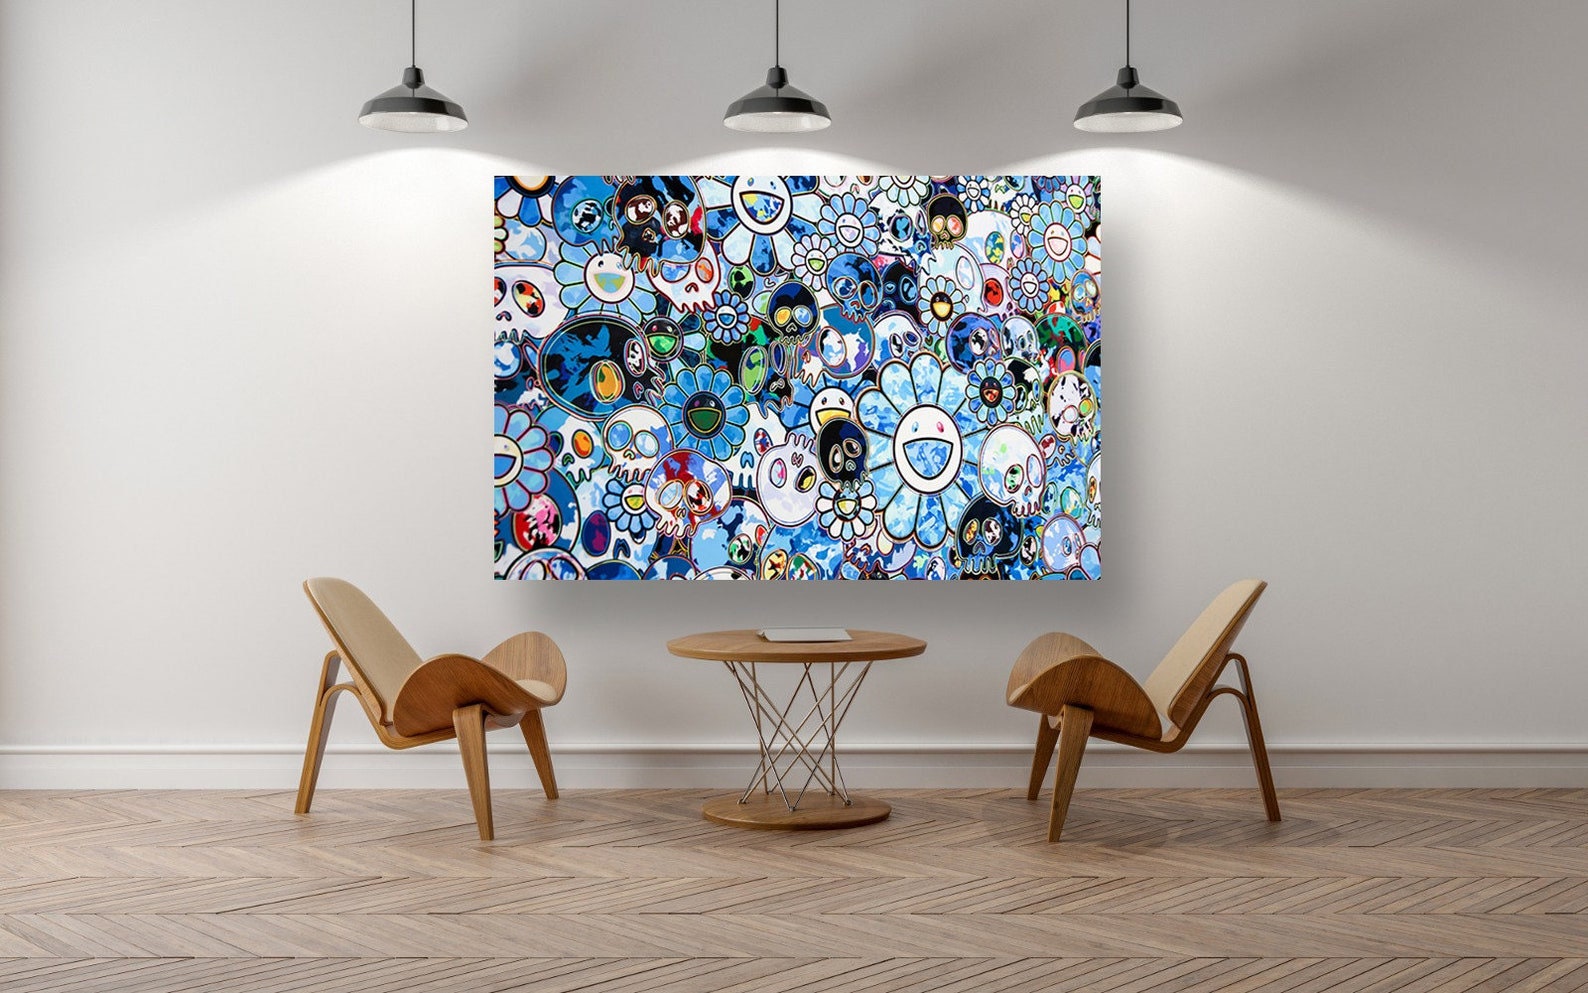 Huge “Flower cushion” XL (1.5 Meters) from Takashi Murakami - Dope! Gallery